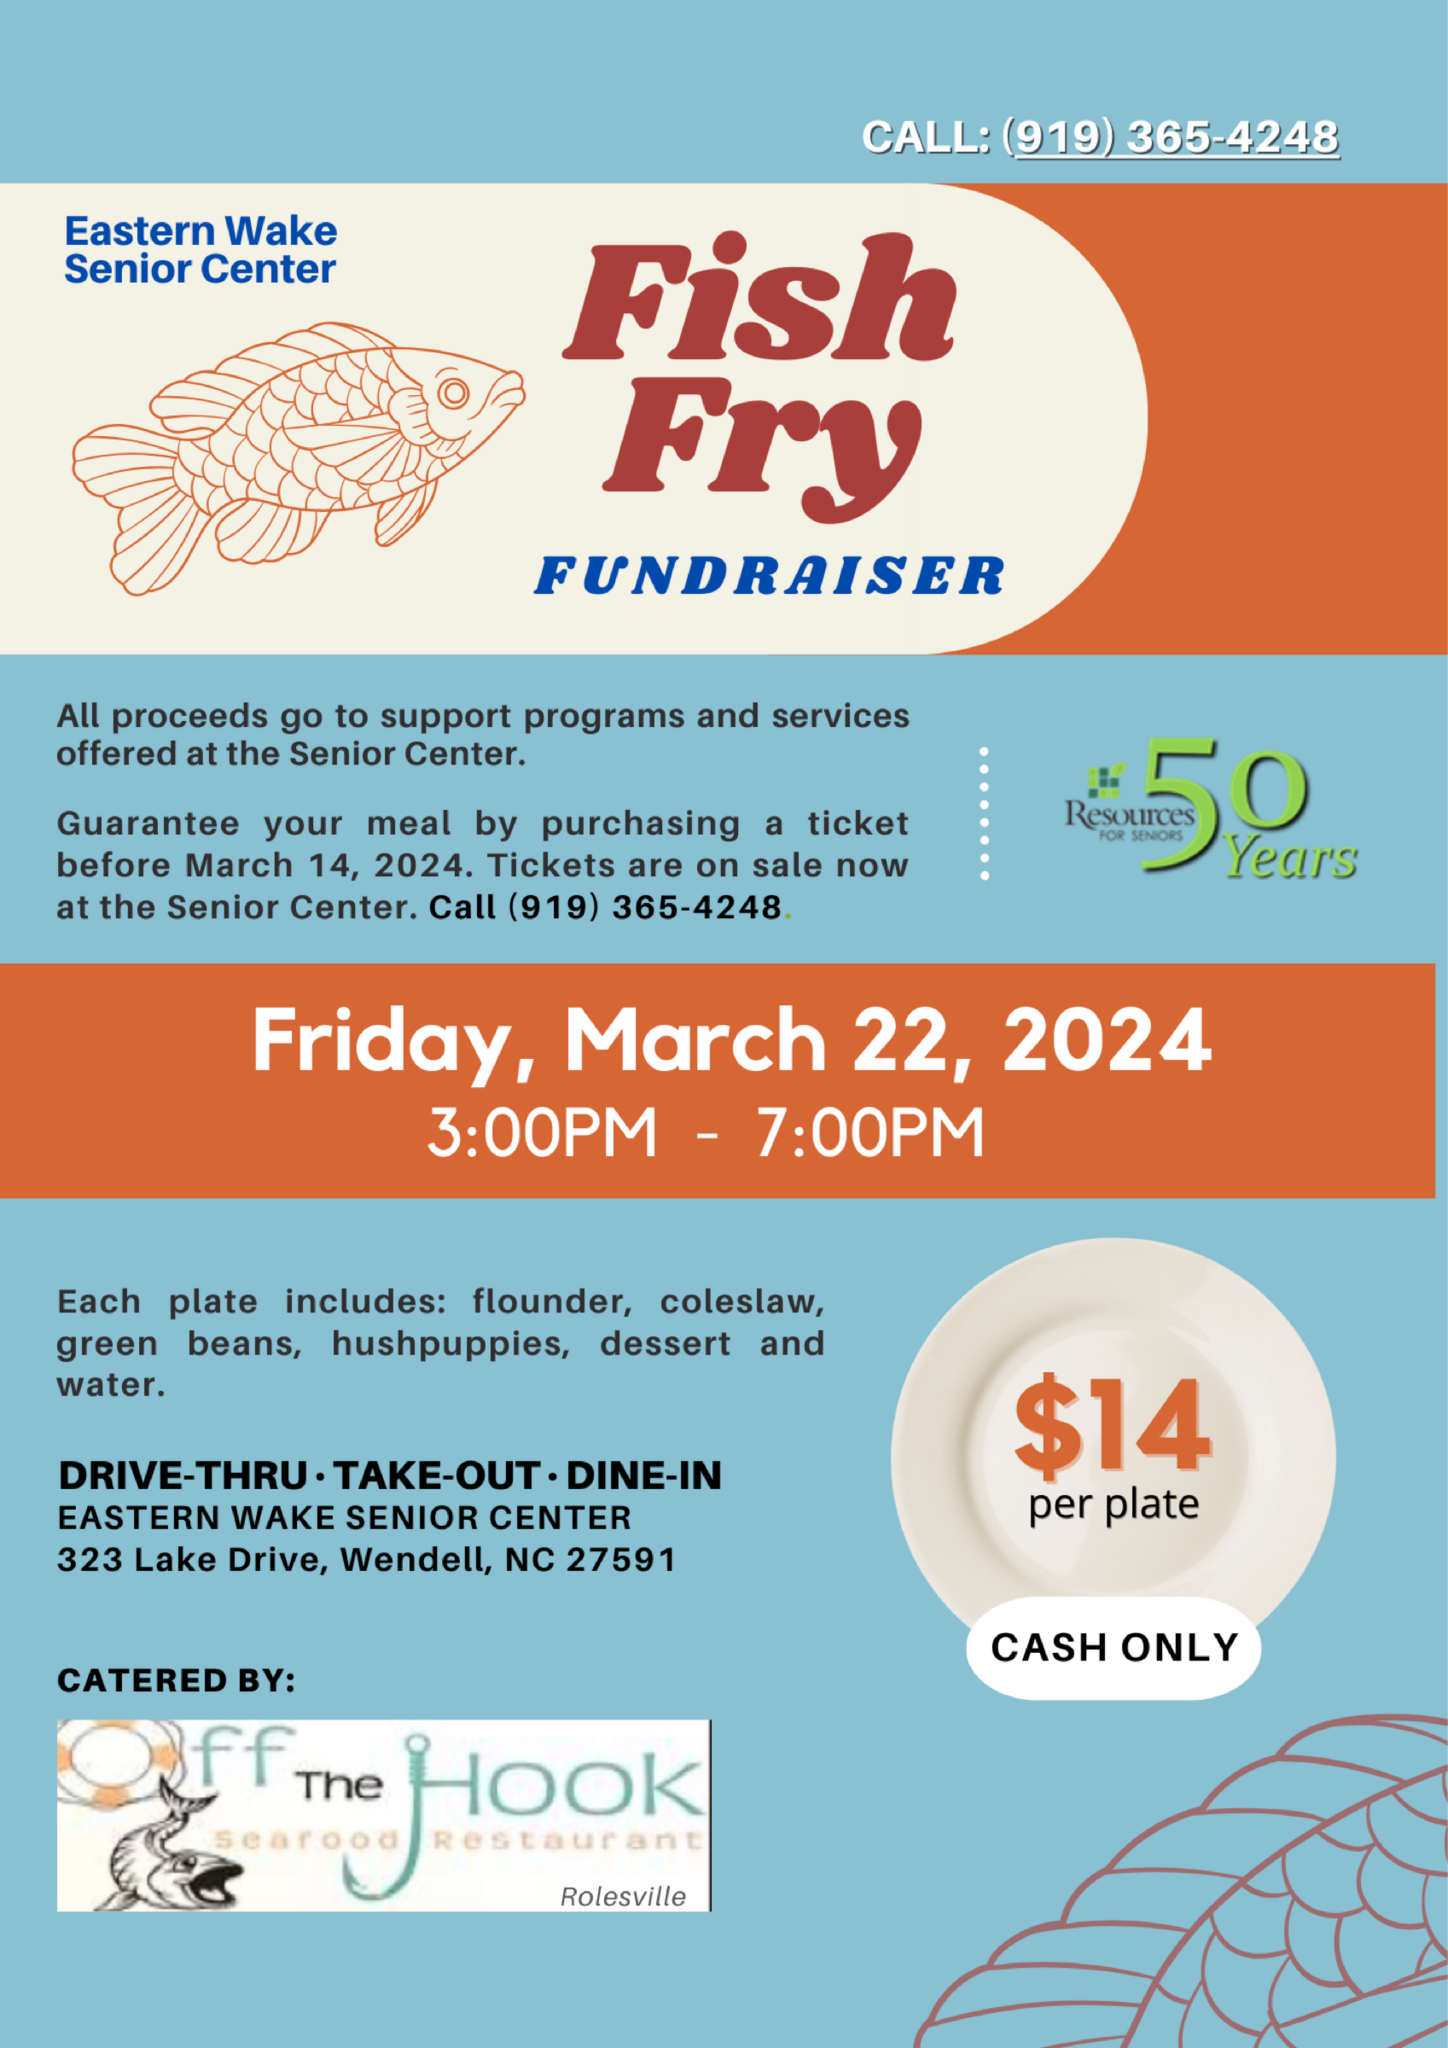 Eastern Wake Senior Center Fish Fry Fundraisee